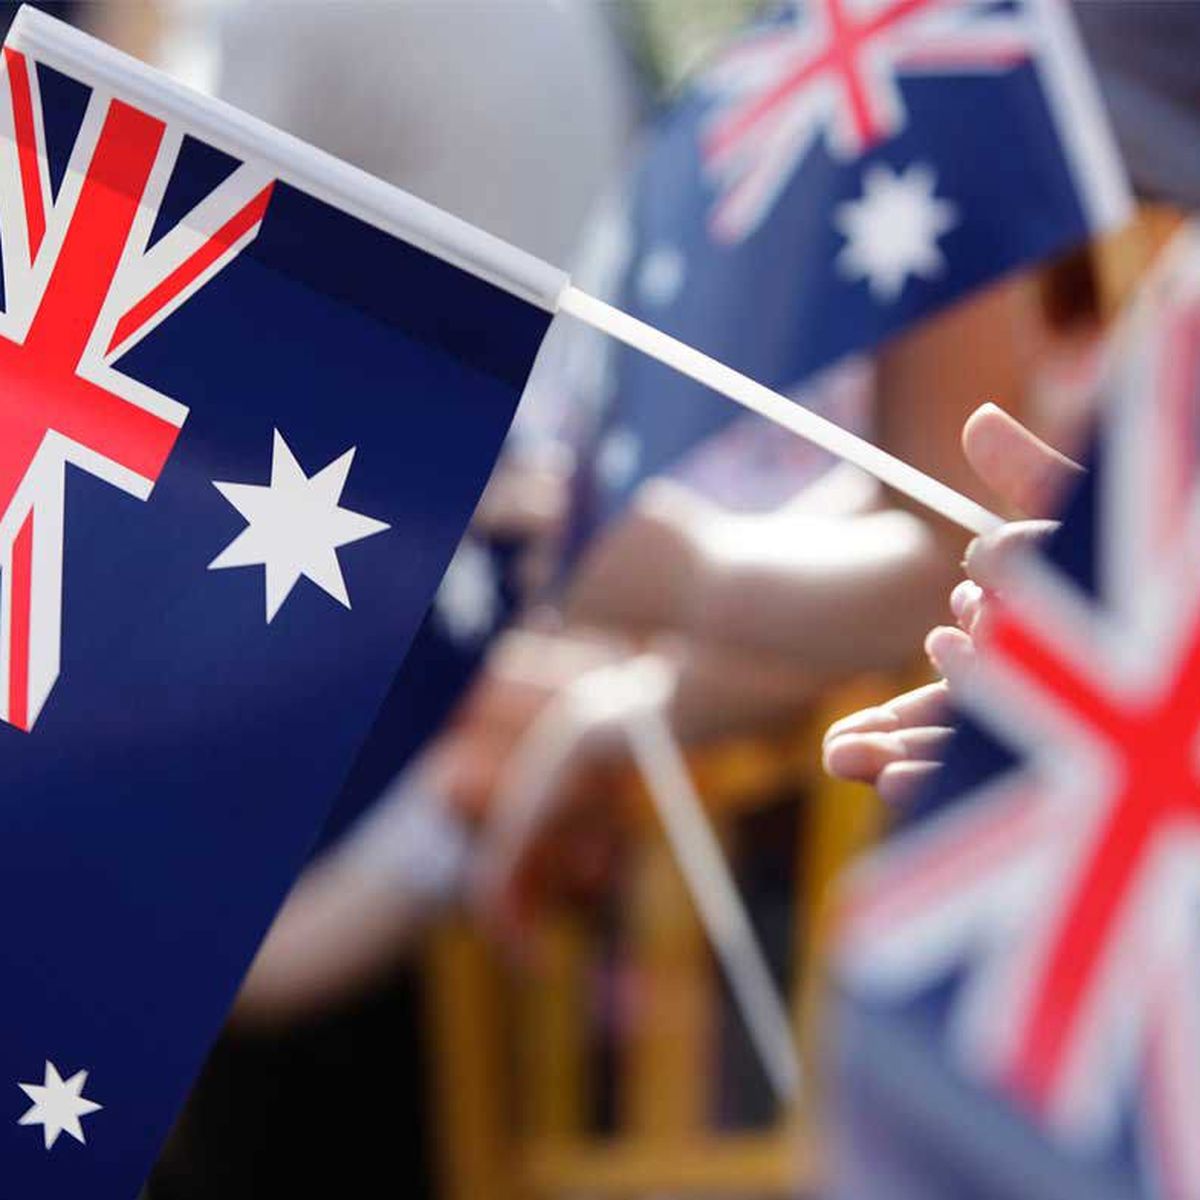 Australian Australia Day Flag Thongs Stock Image - Image of symbol